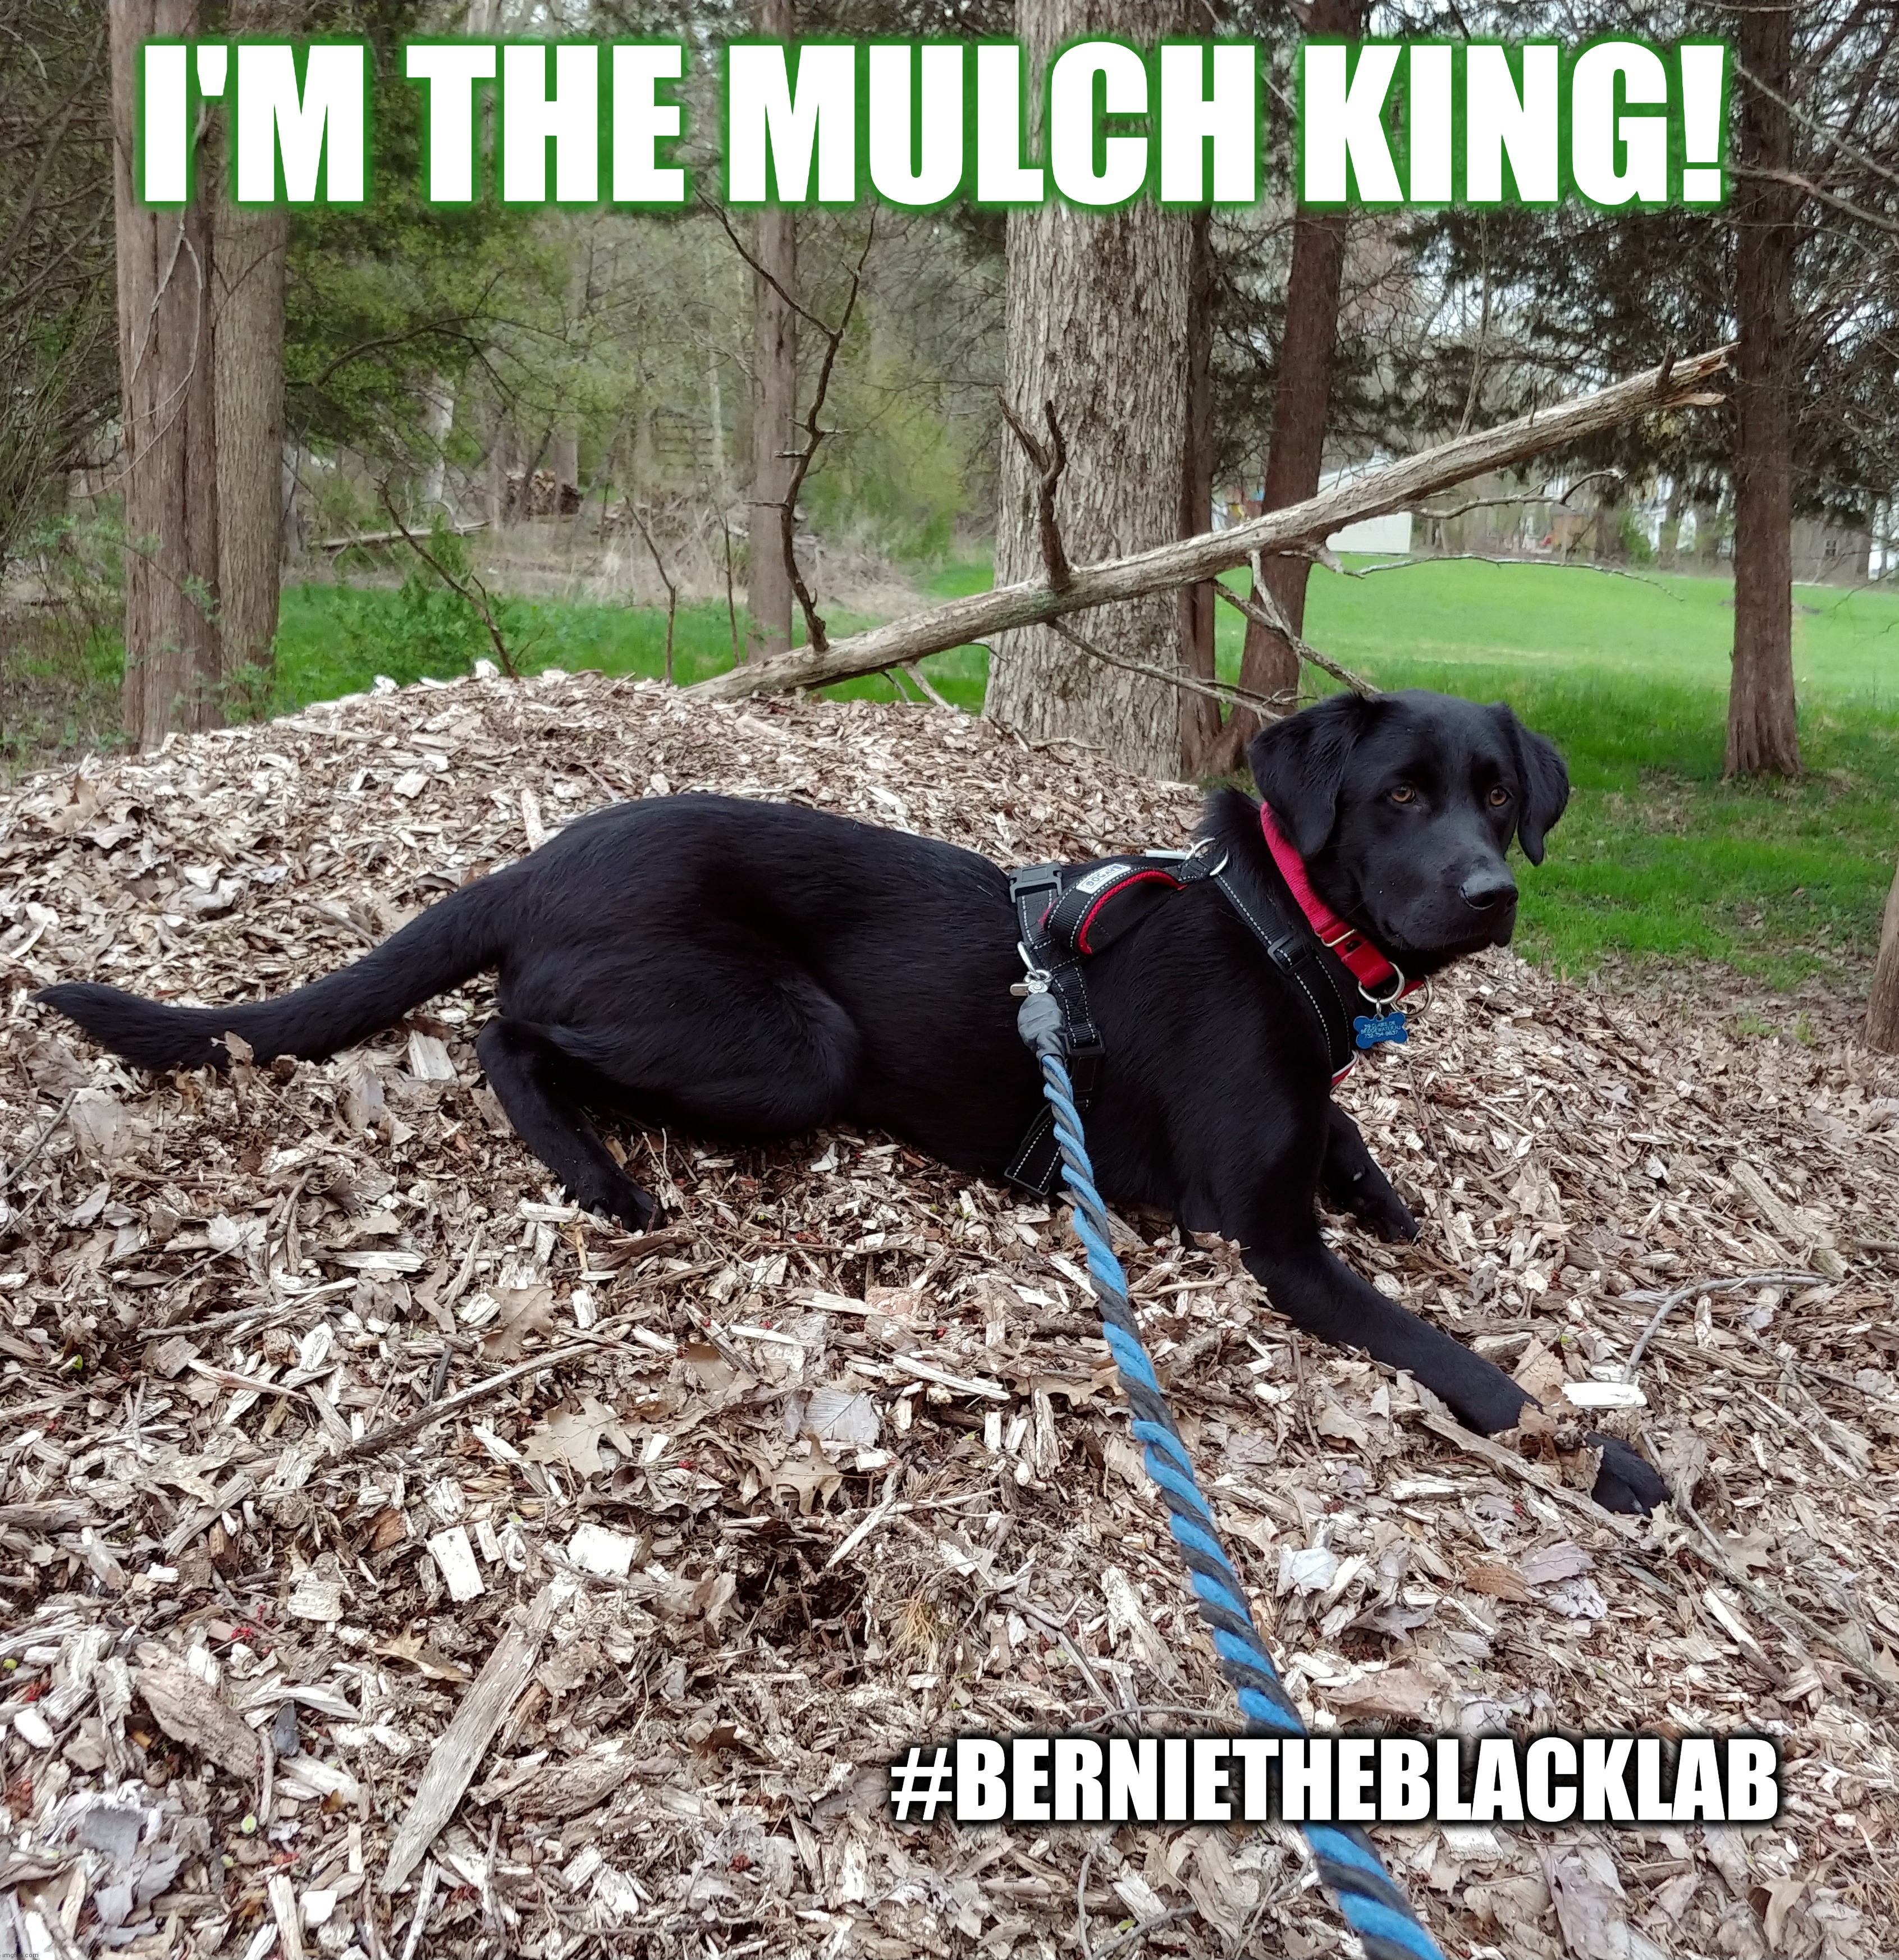 I'm the mulch king! | I'M THE MULCH KING! #BERNIETHEBLACKLAB | image tagged in bernie the black lab,dogs,funny,memes,mulch,gardening | made w/ Imgflip meme maker